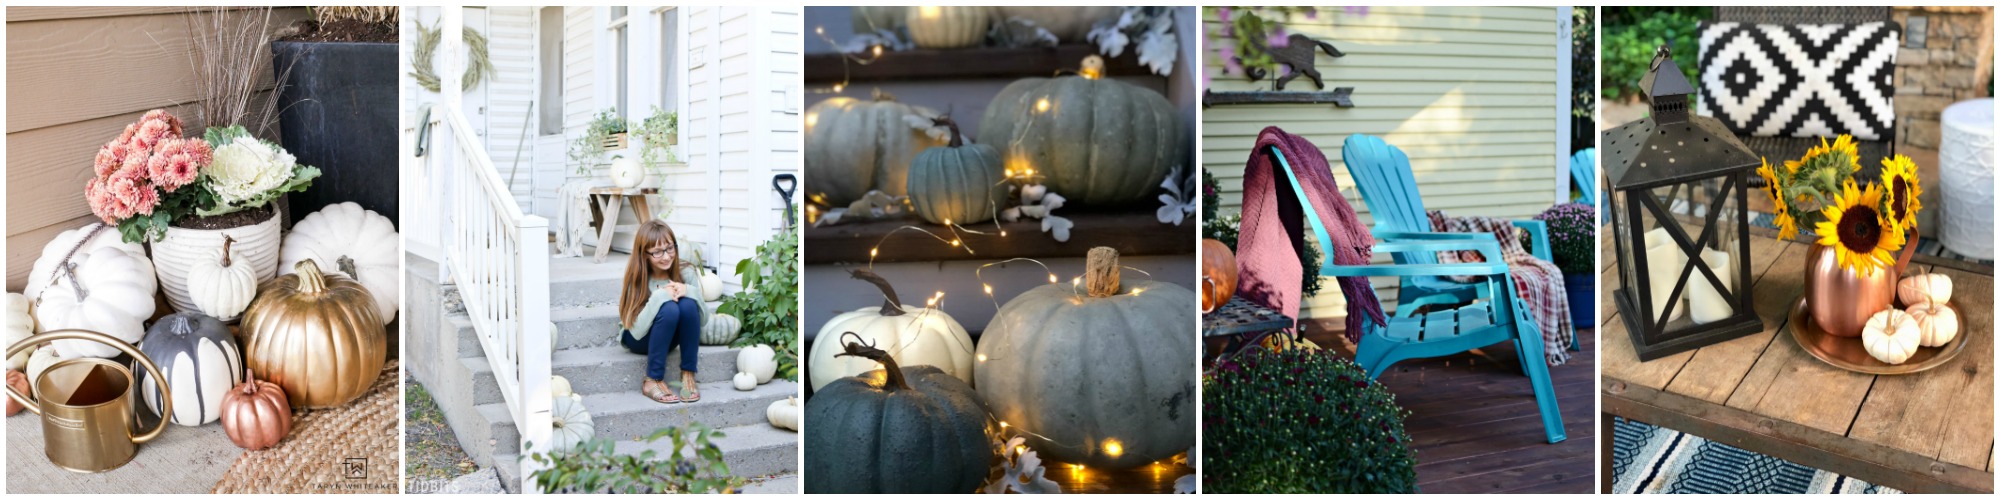 Neutral Fall Porch with Pumpkins and Cornstalks